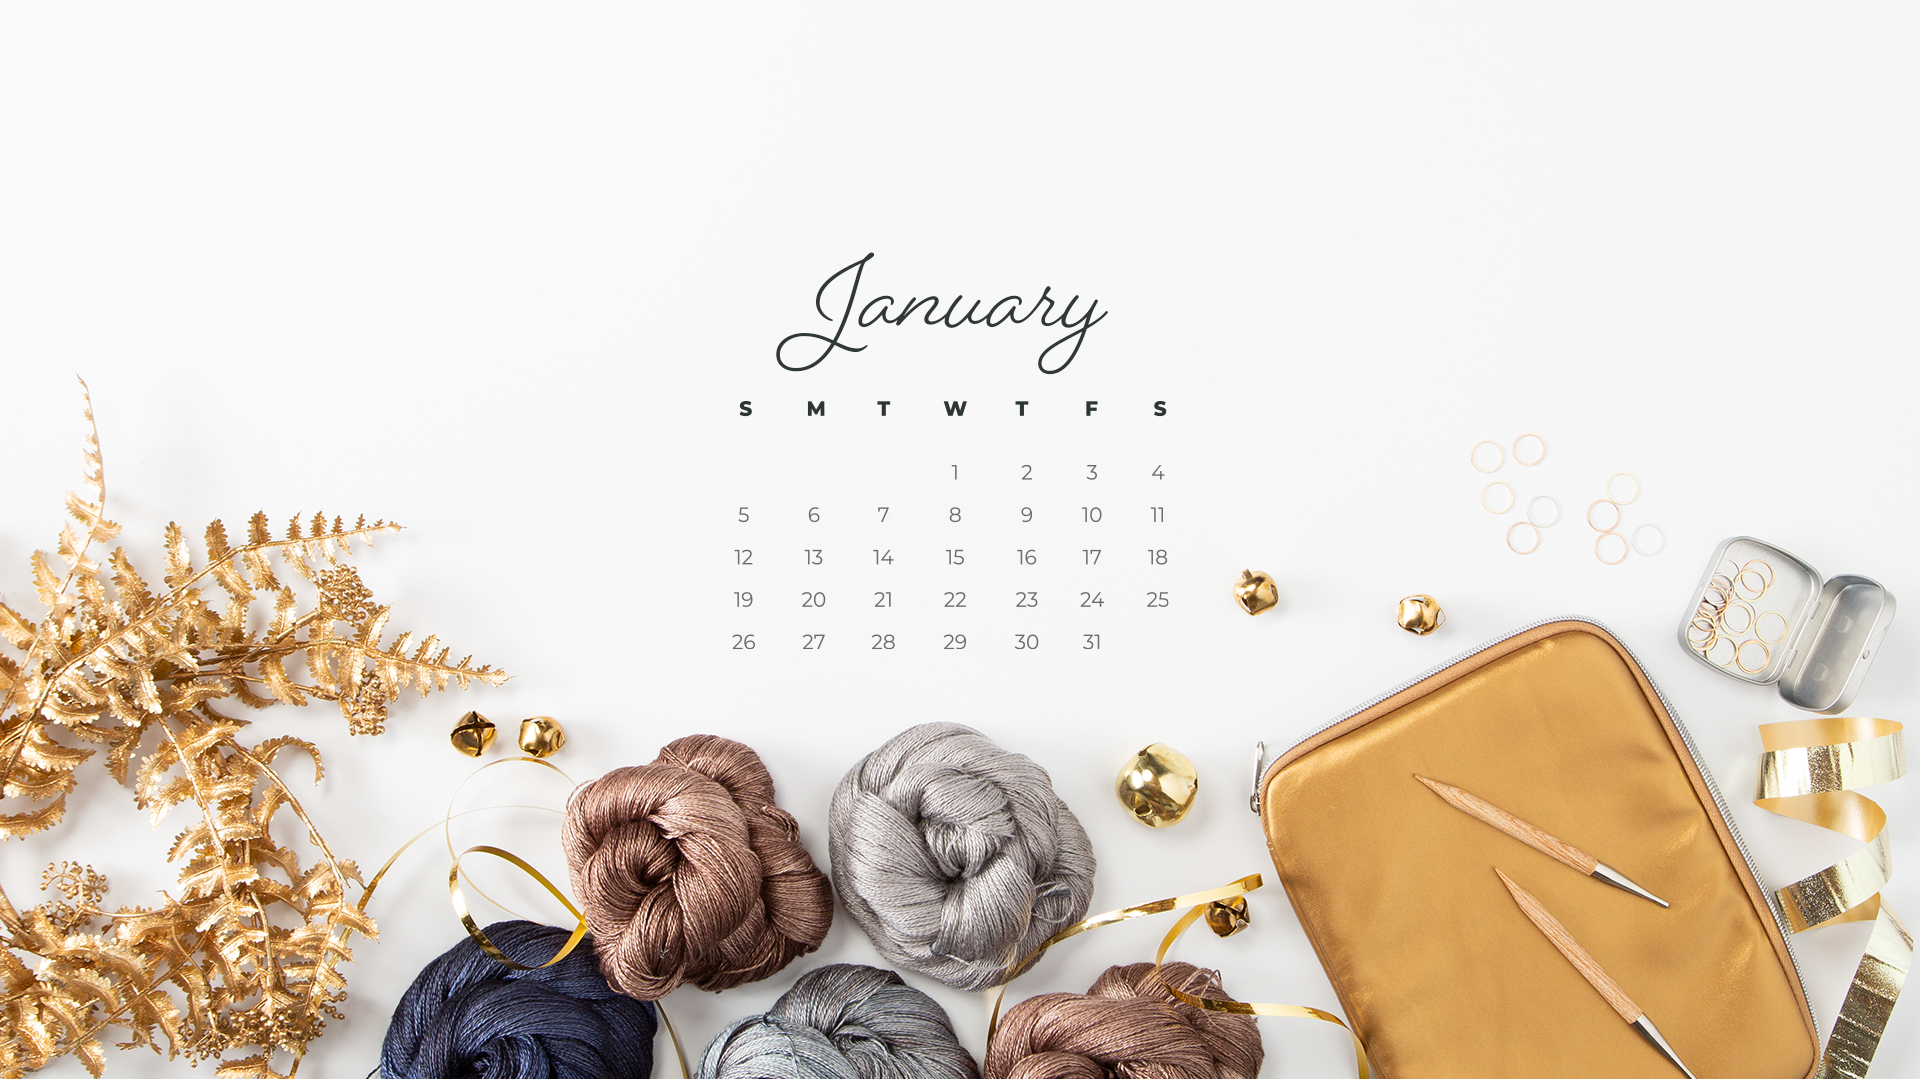 free-downloadable-january-calendar-the-knit-picks-staff-knitting-blog